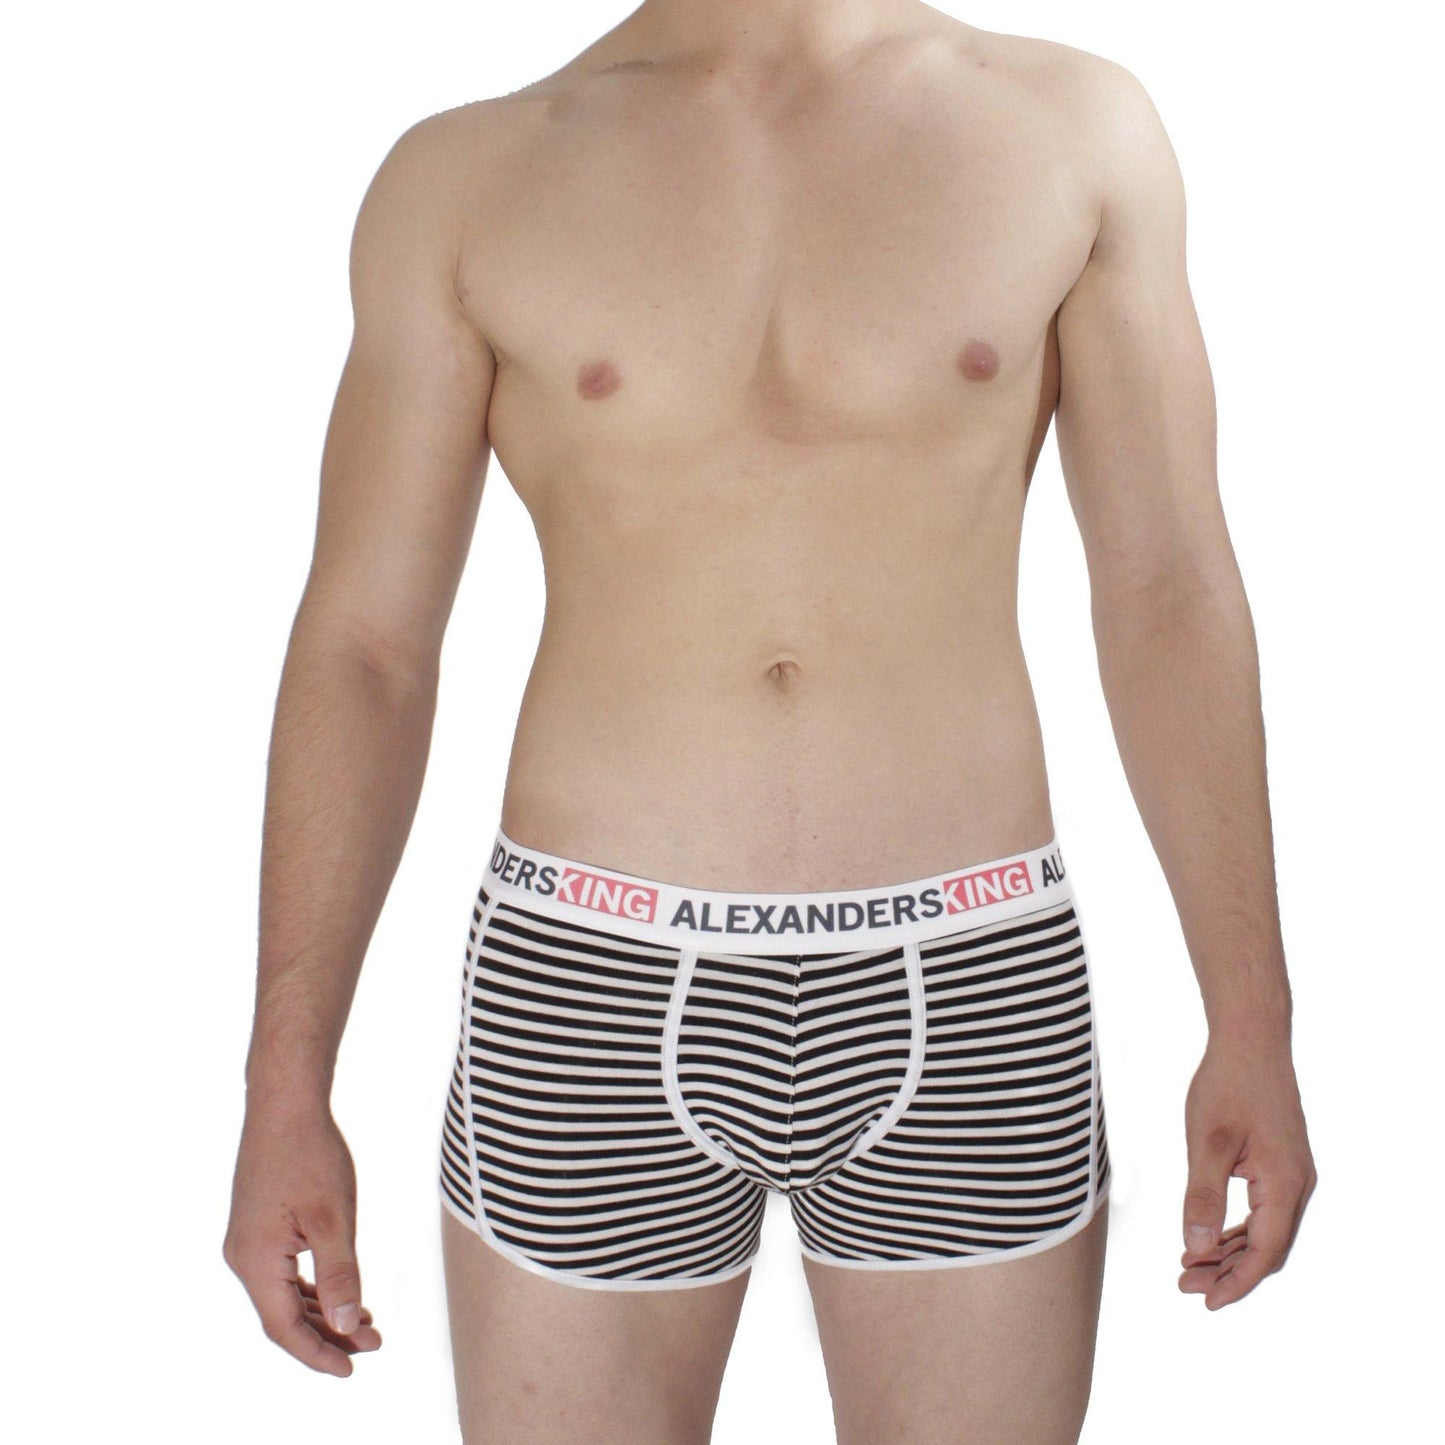 BP0019 - Horizontes DÌ?a y noche Comfort - AlexandersKing Underwear